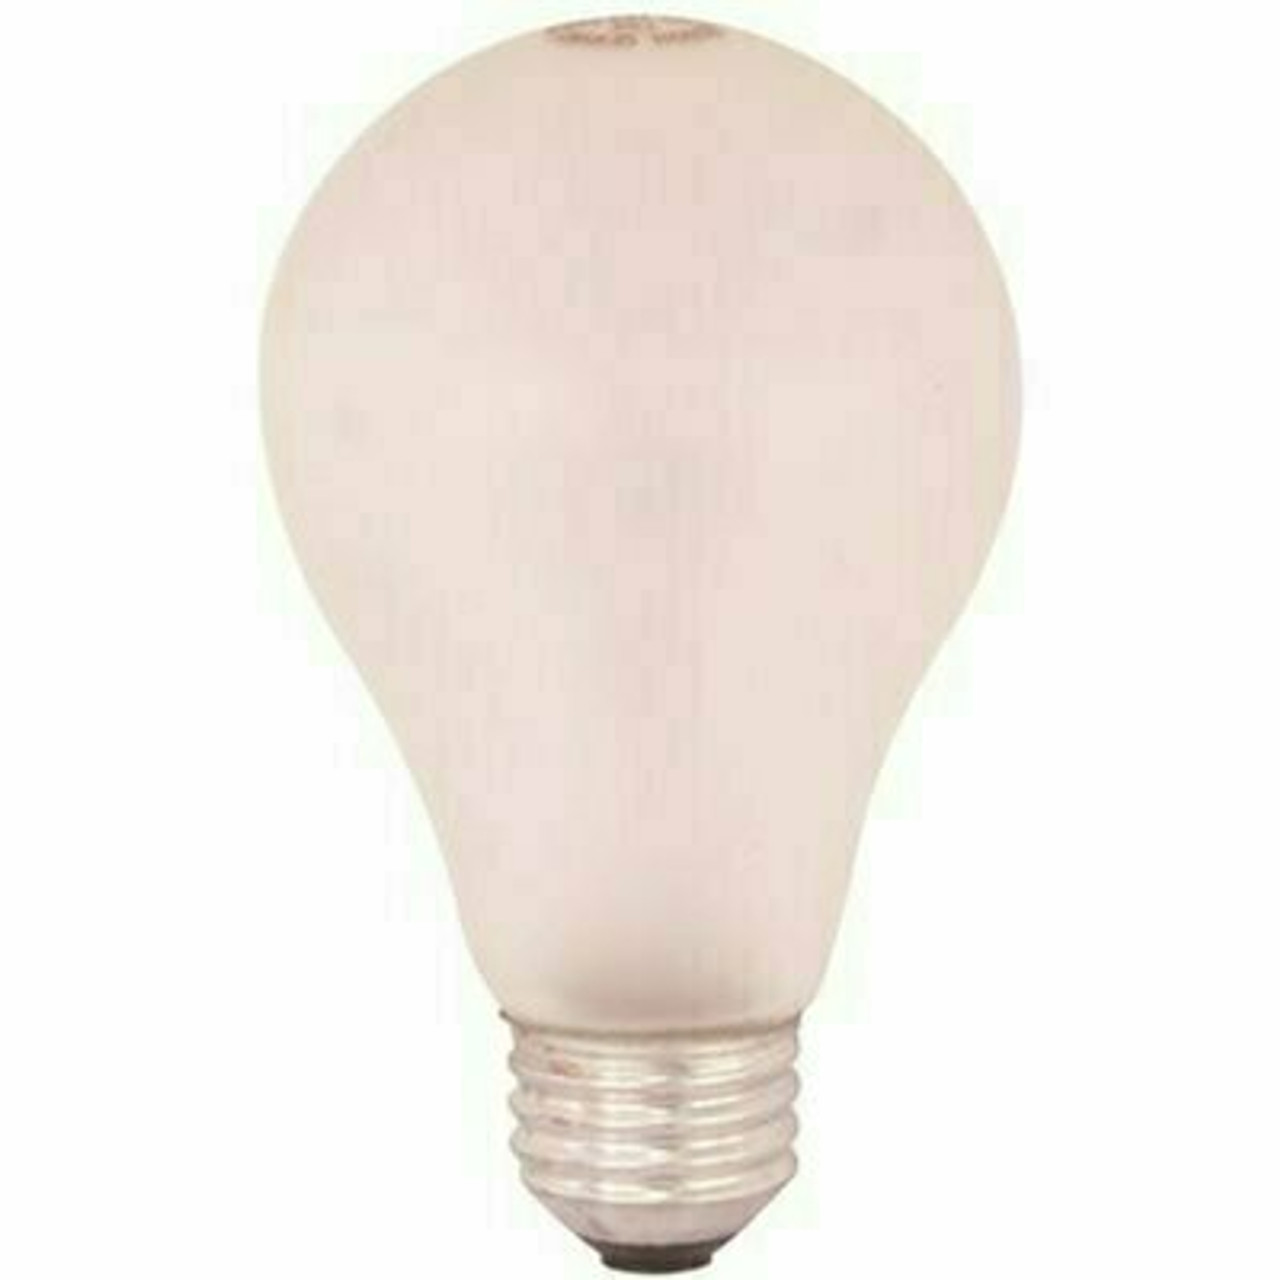 Sylvania 69-Watt A21 Incandescent Light Bulb (24-Pack)